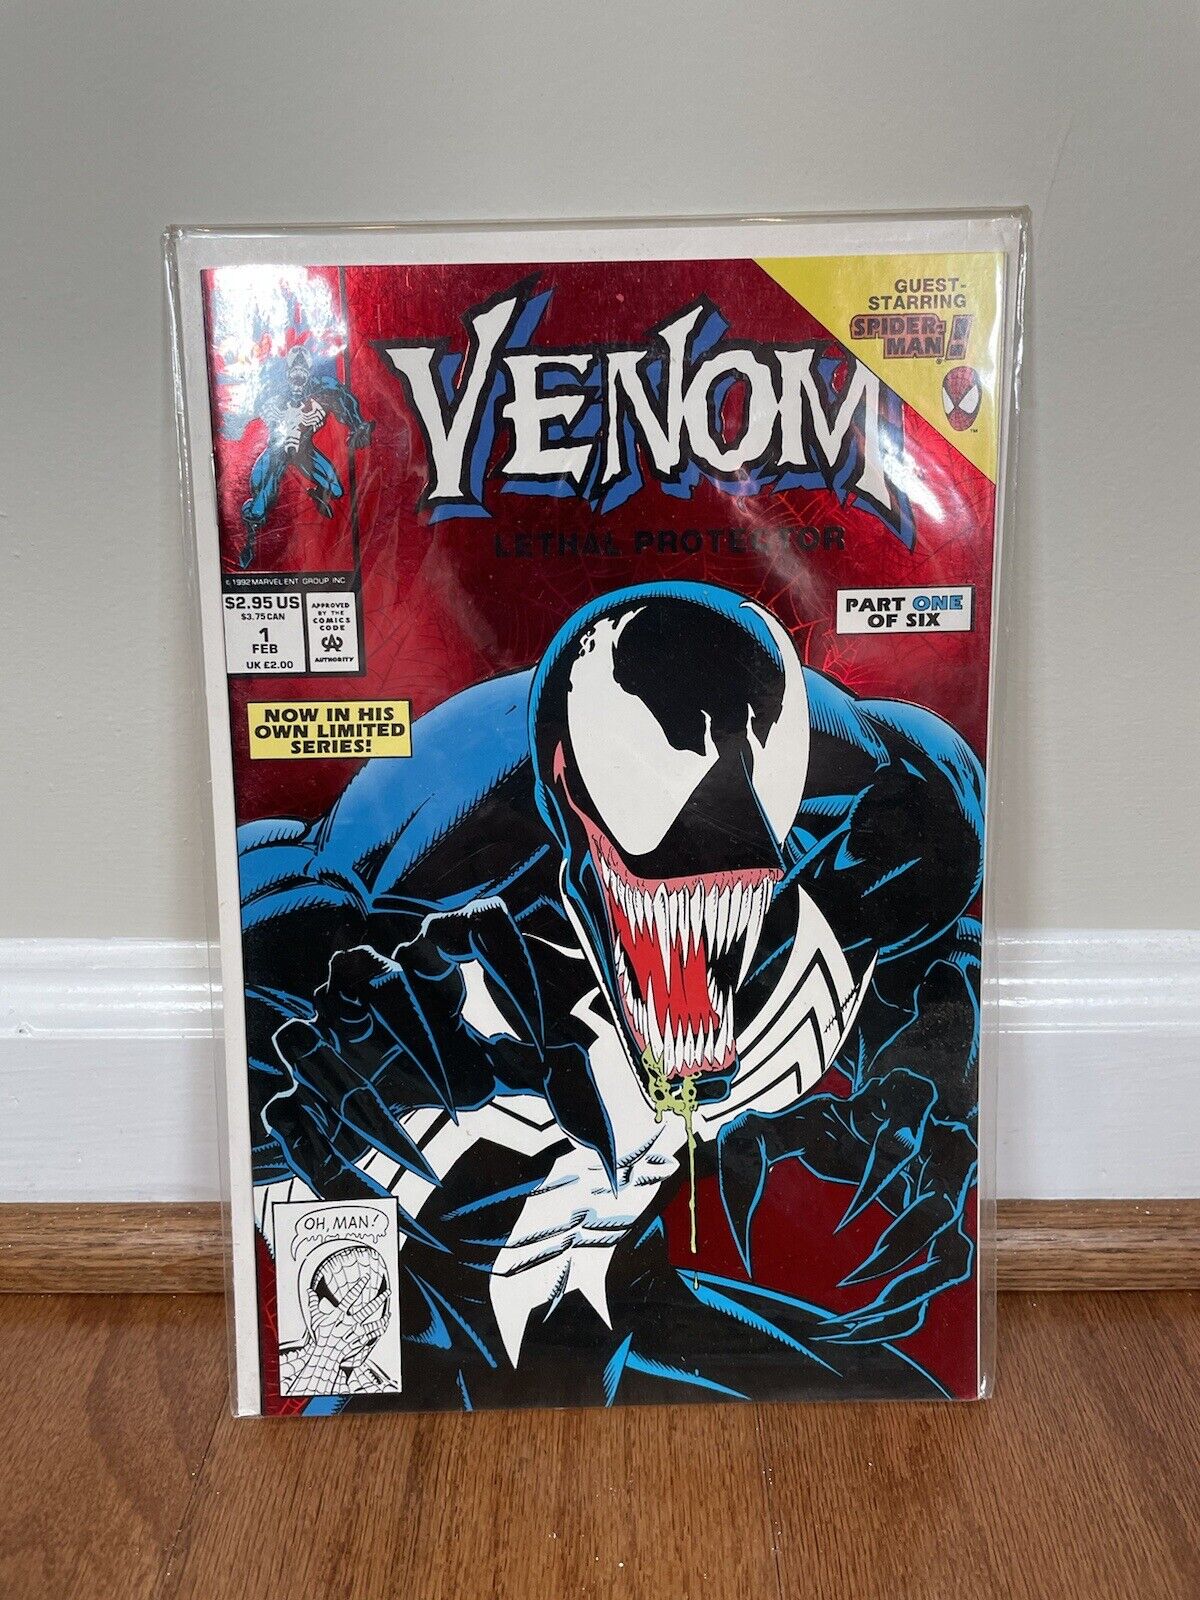 Venom Lethal Protector #1 (Marvel Comics, 1992) Part 1 of 6 Red Foil Cover VG 